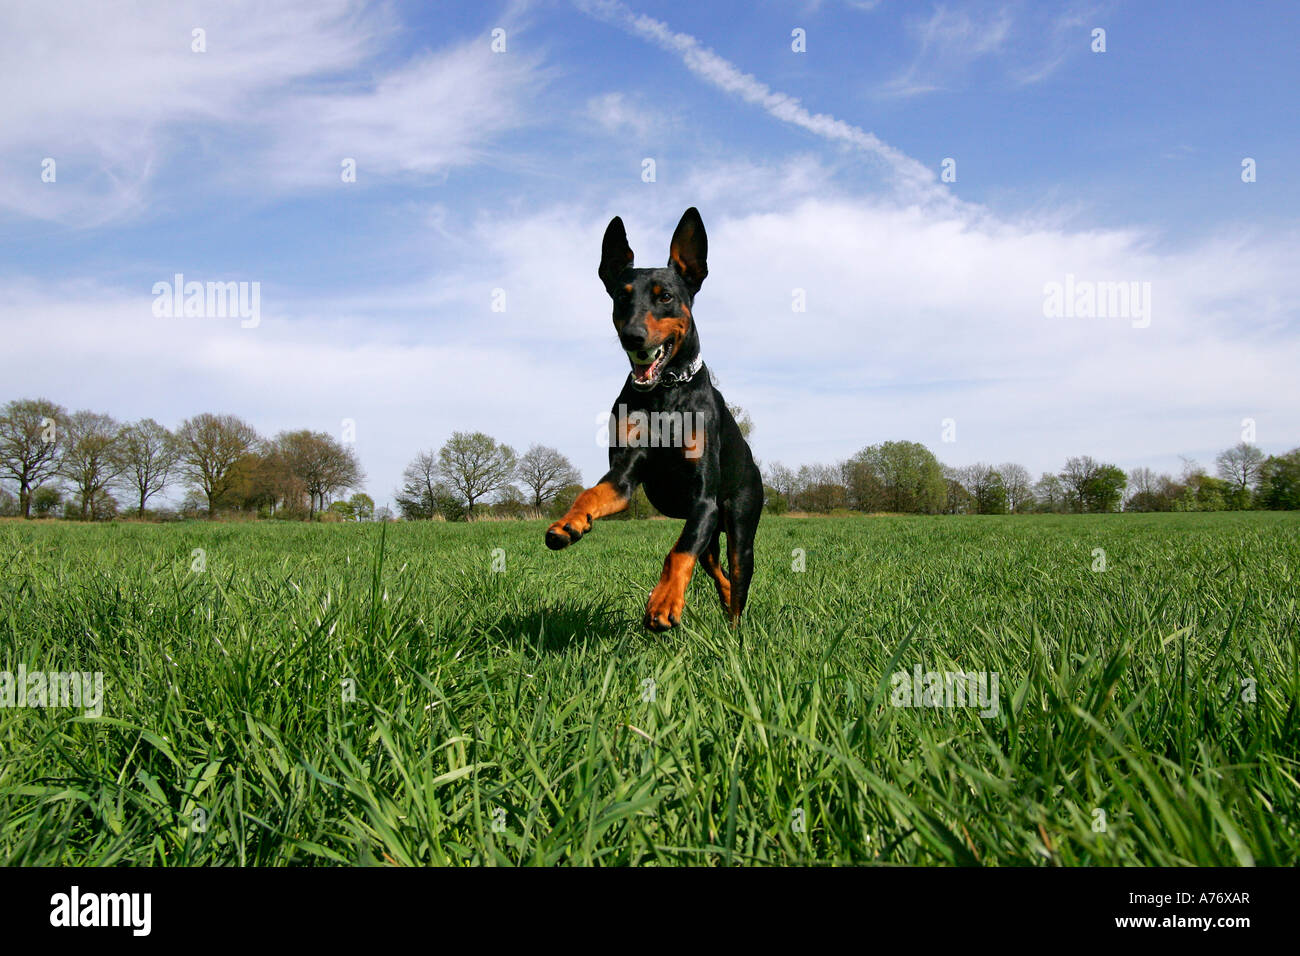 Esecuzione di dobermann - doberman - maschio - cane domestico Foto Stock